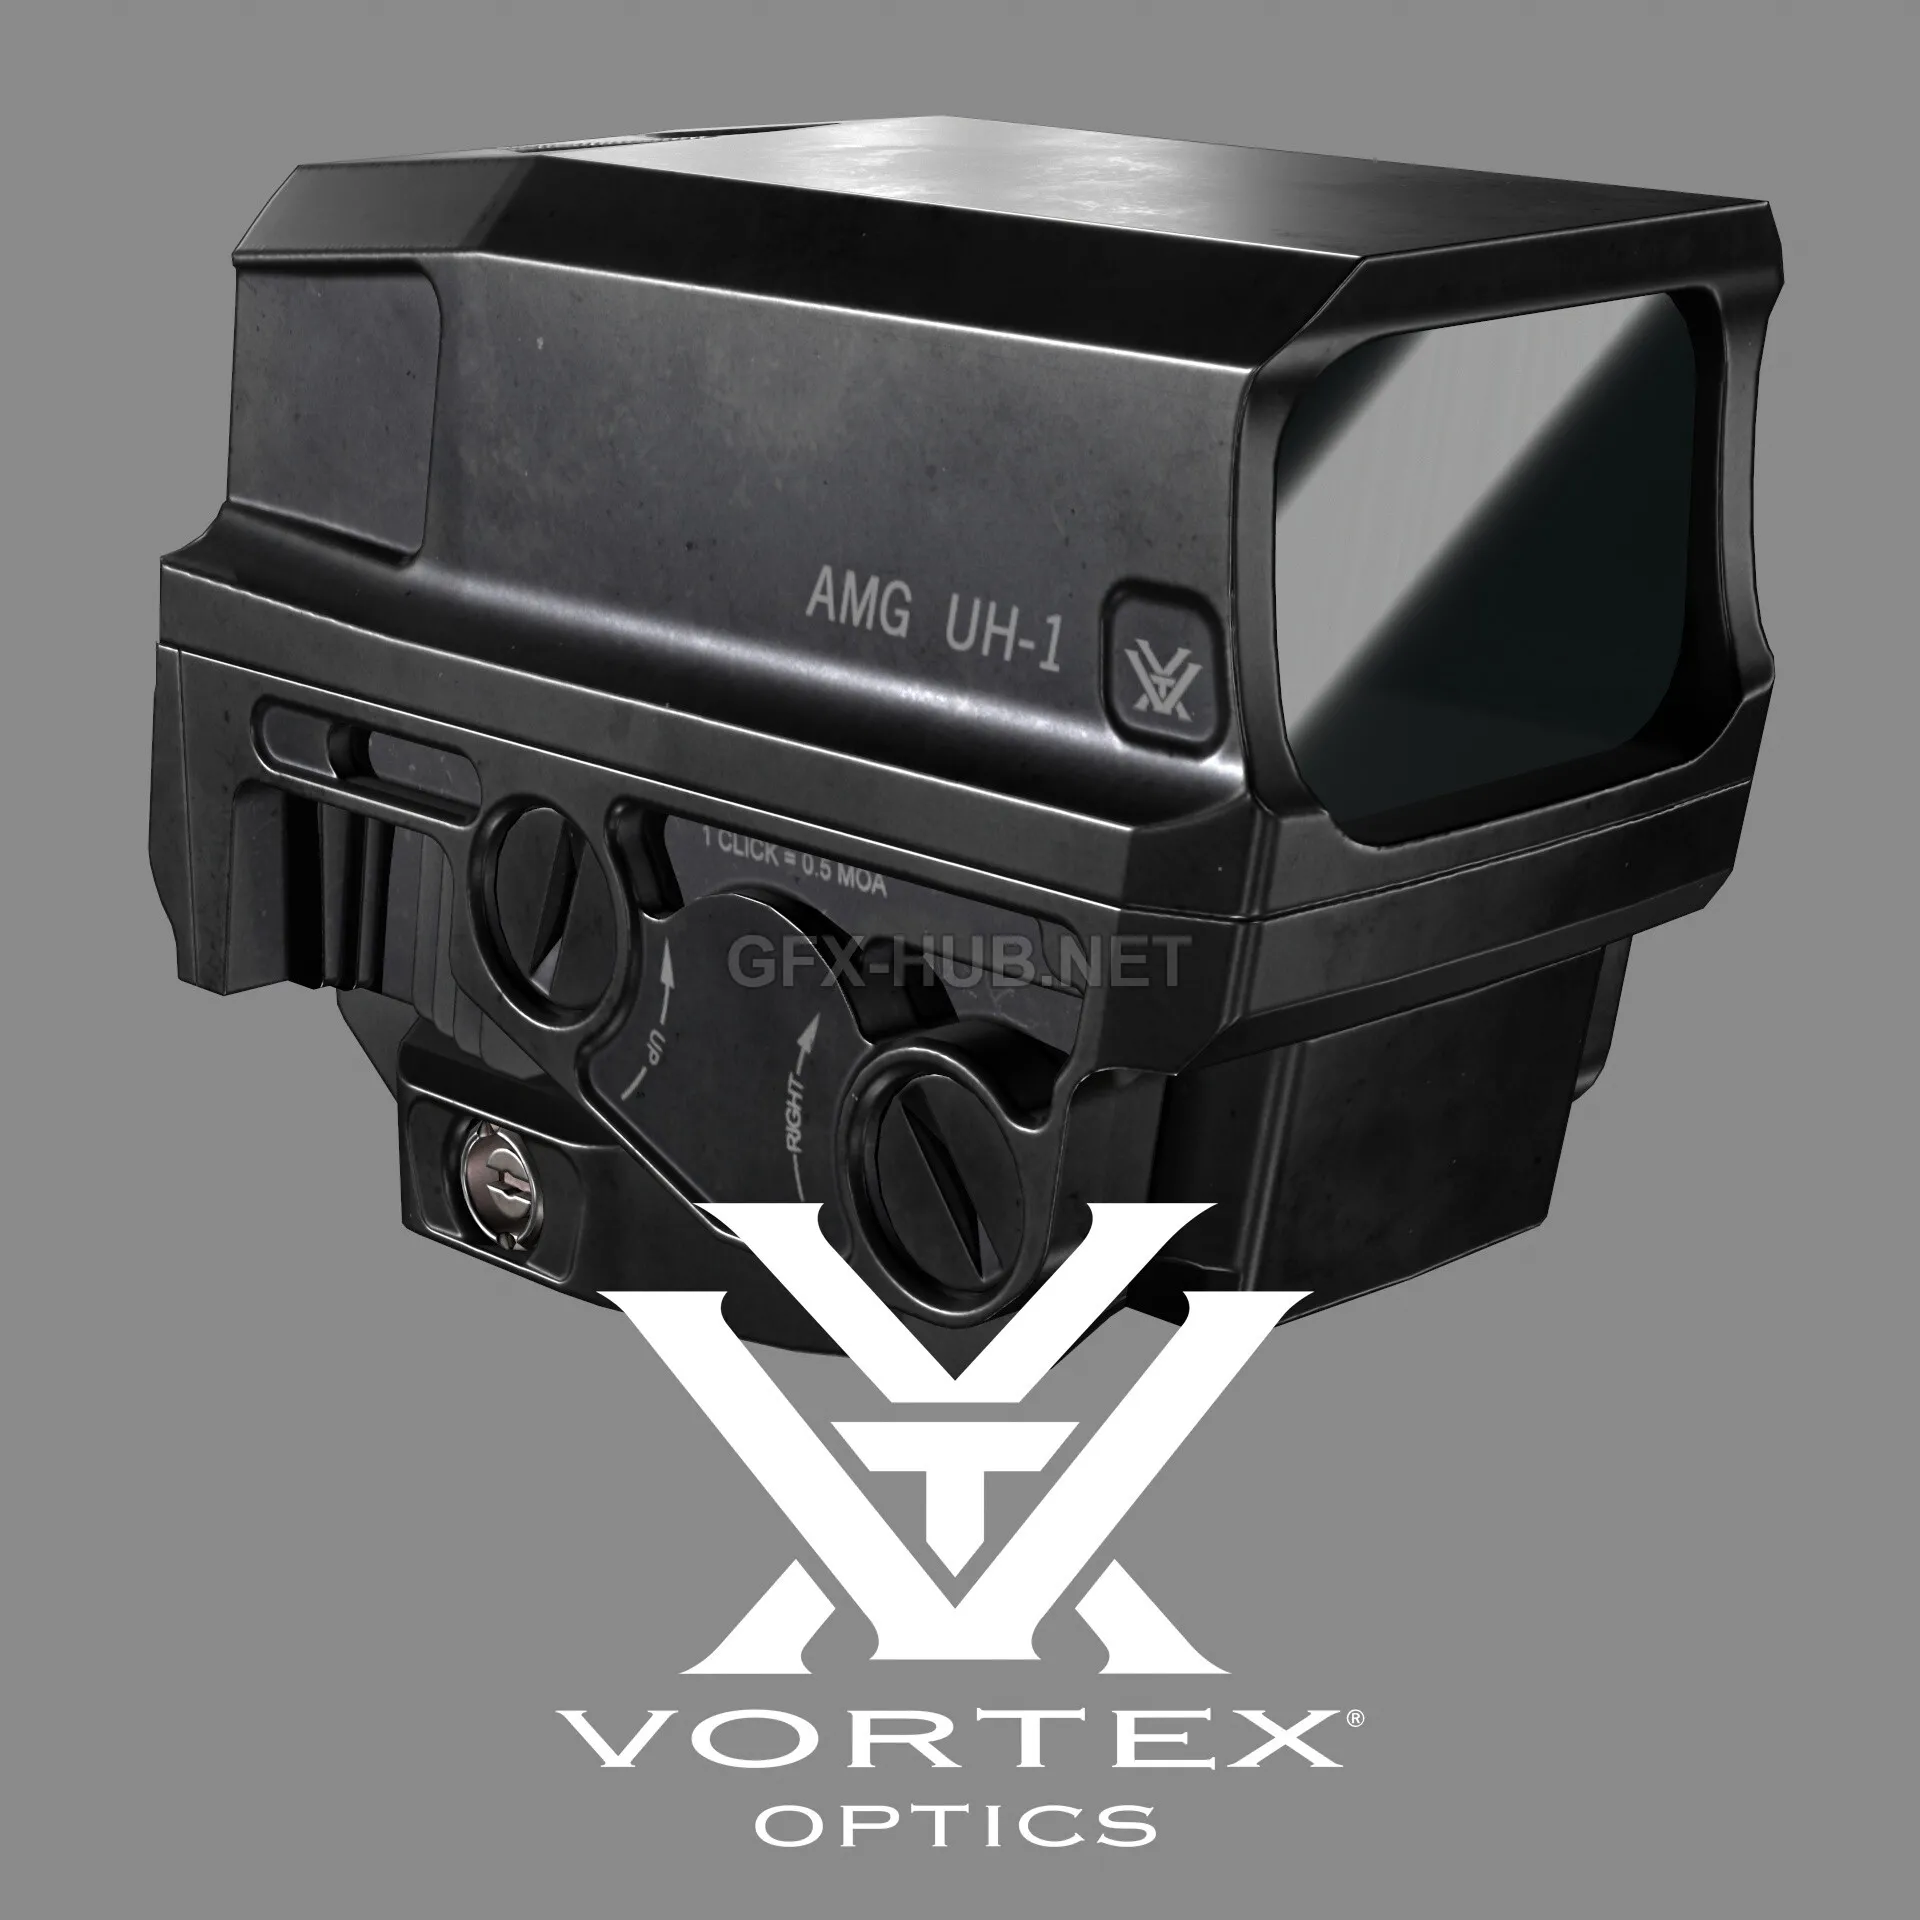 PBR Game 3D Model – Vortex Optics AMG UH-1 GEN II